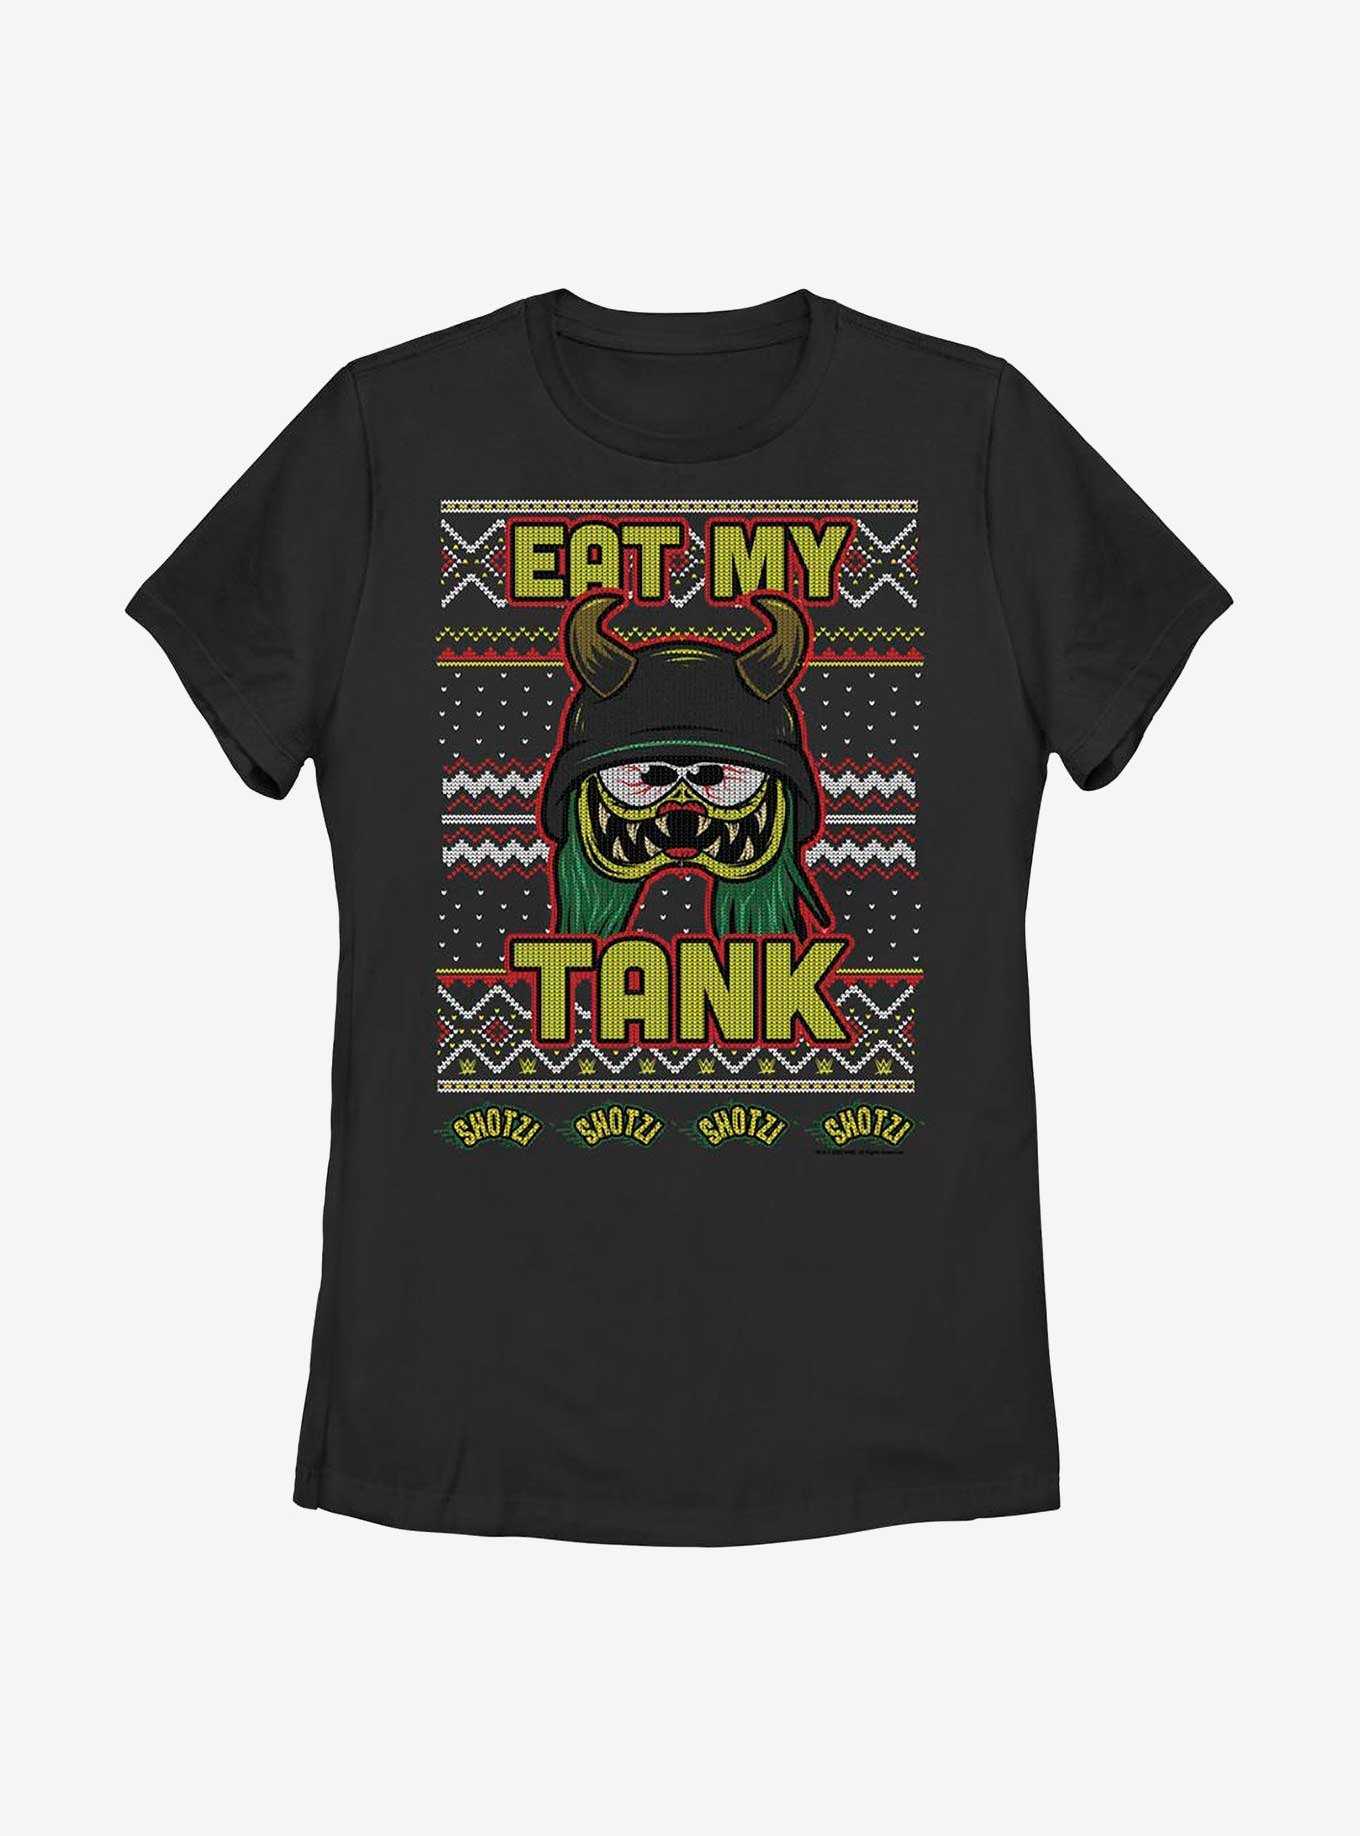 WWE Shotzi Blackheart Eat My Tank Ugly Christmas Womens T-Shirt, , hi-res